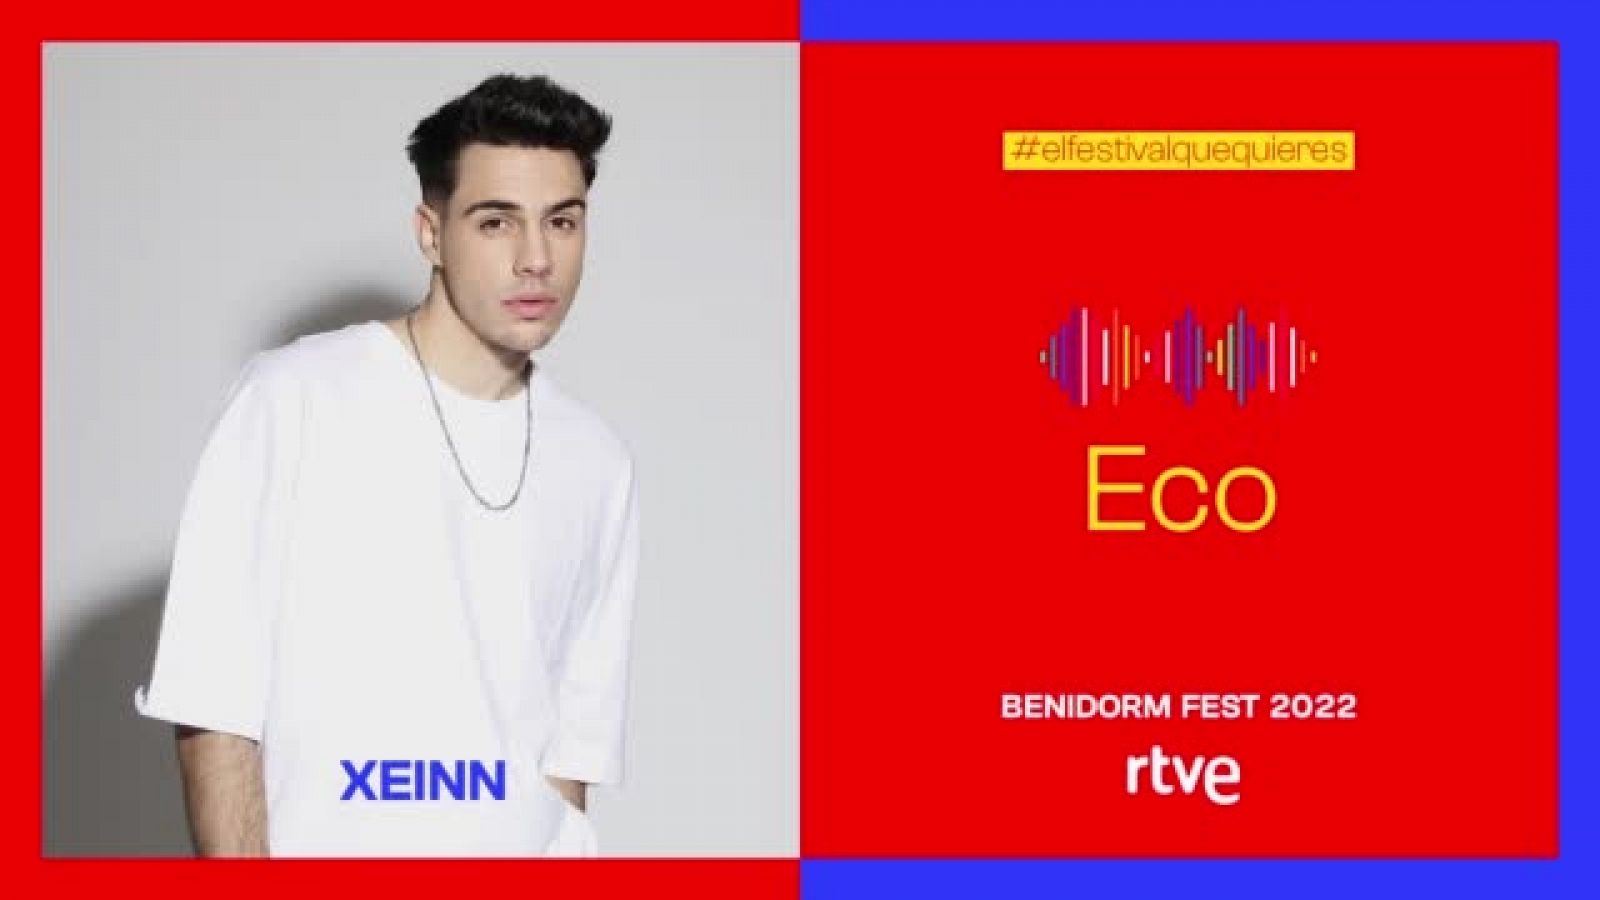 Benidorm Fest: Xeinn interpreta "Eco"